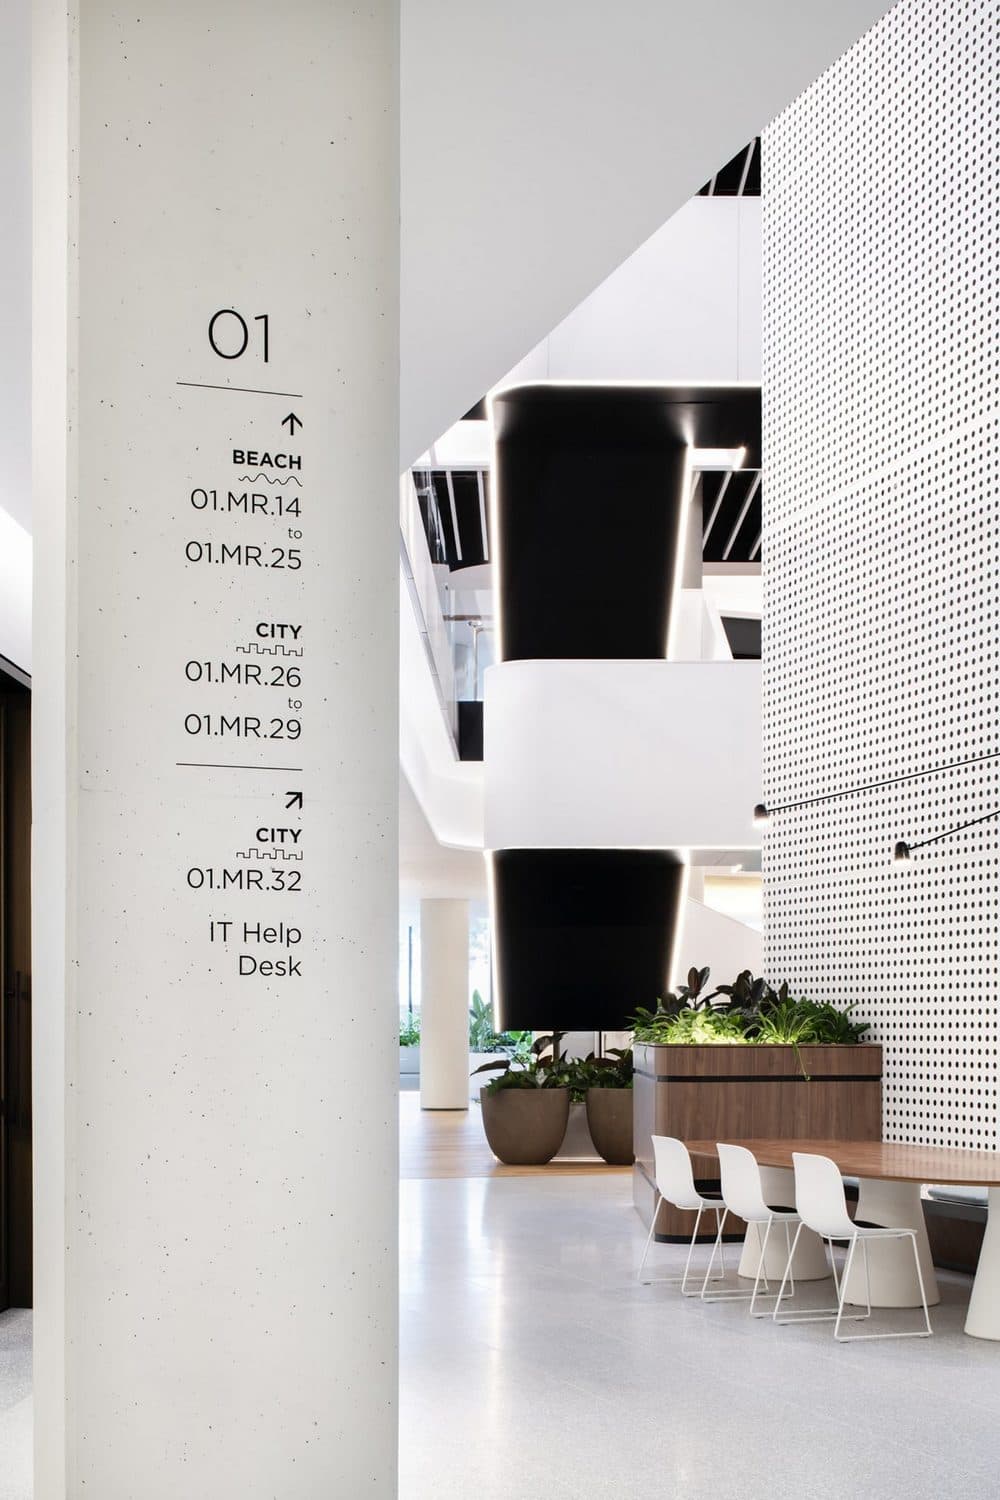 Agile Workplace, Sydney / Cox Architecture